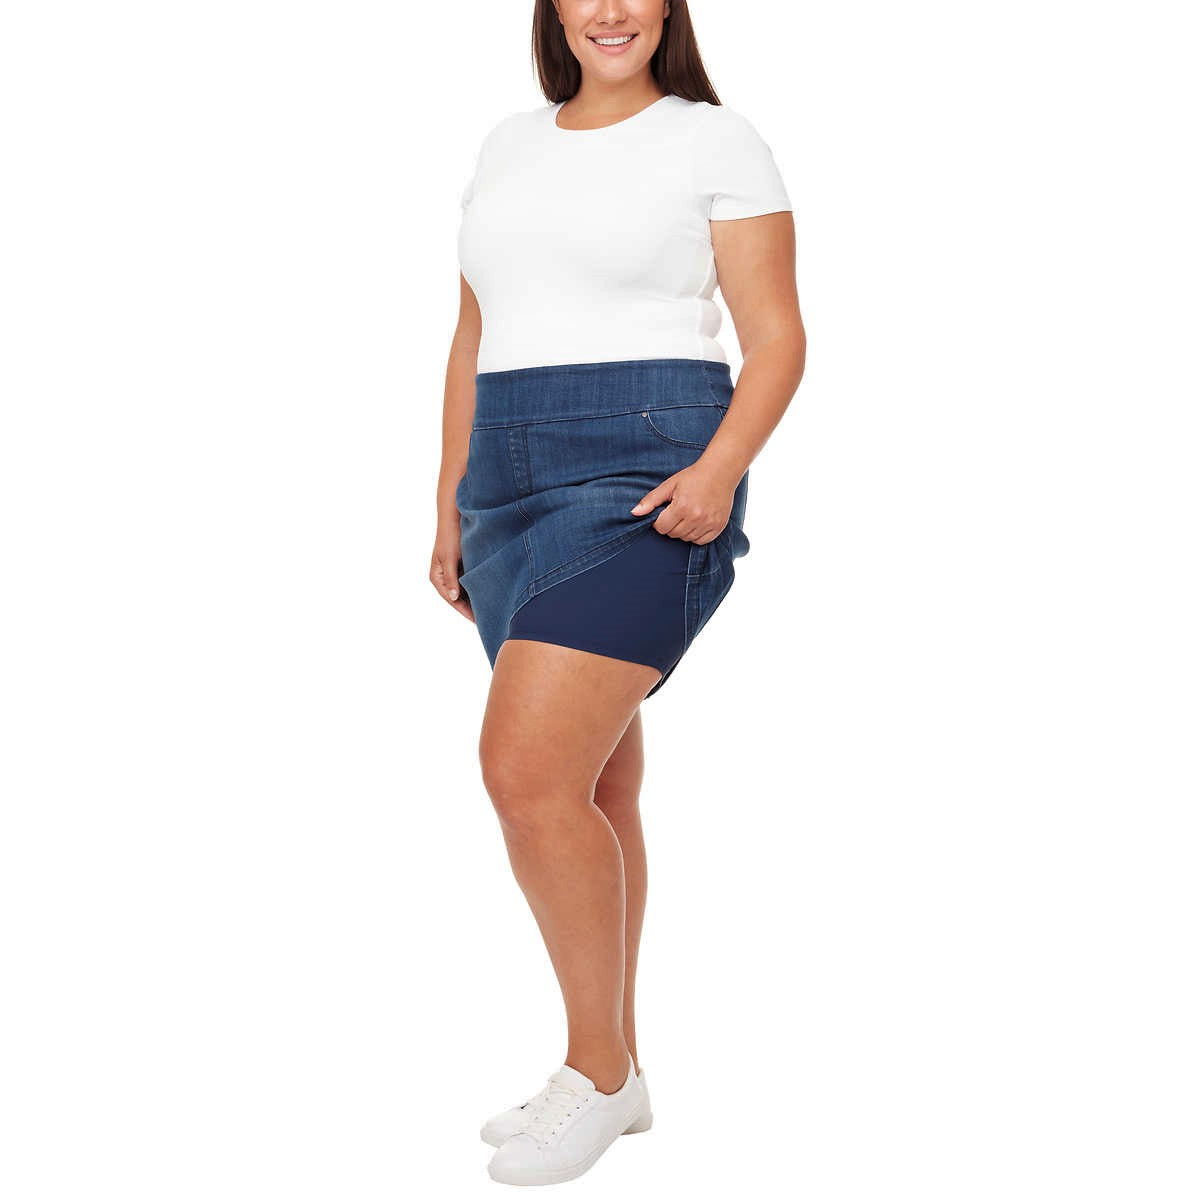 S.C. & CO Women's Built-in Shorts 5 Pockets Stretch Denim Skort